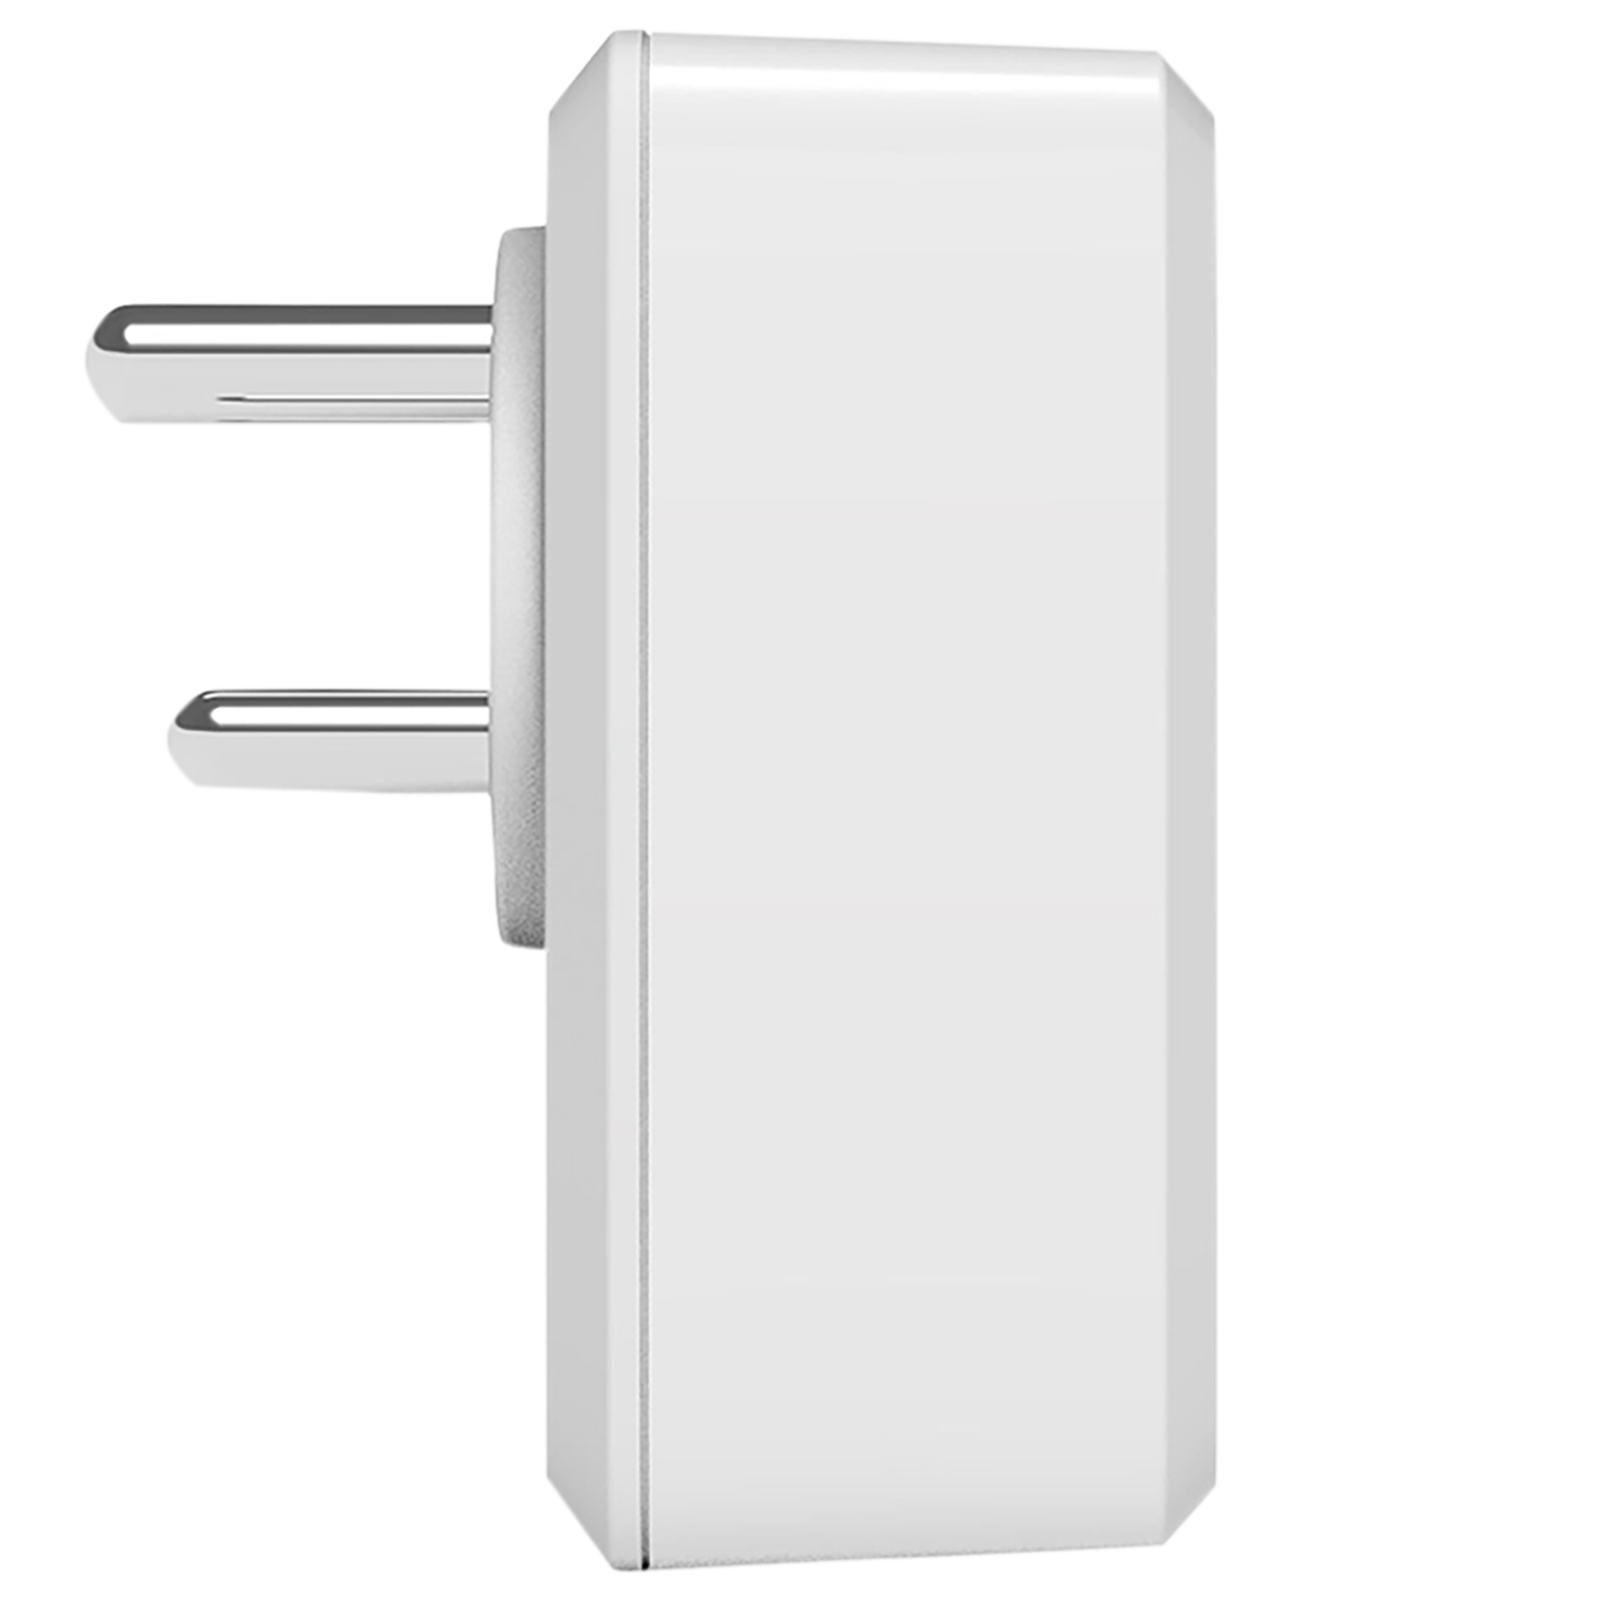 Buy Oakter Oak Plug Mini Wi-Fi Smart Plug, White 6 Amp Online at